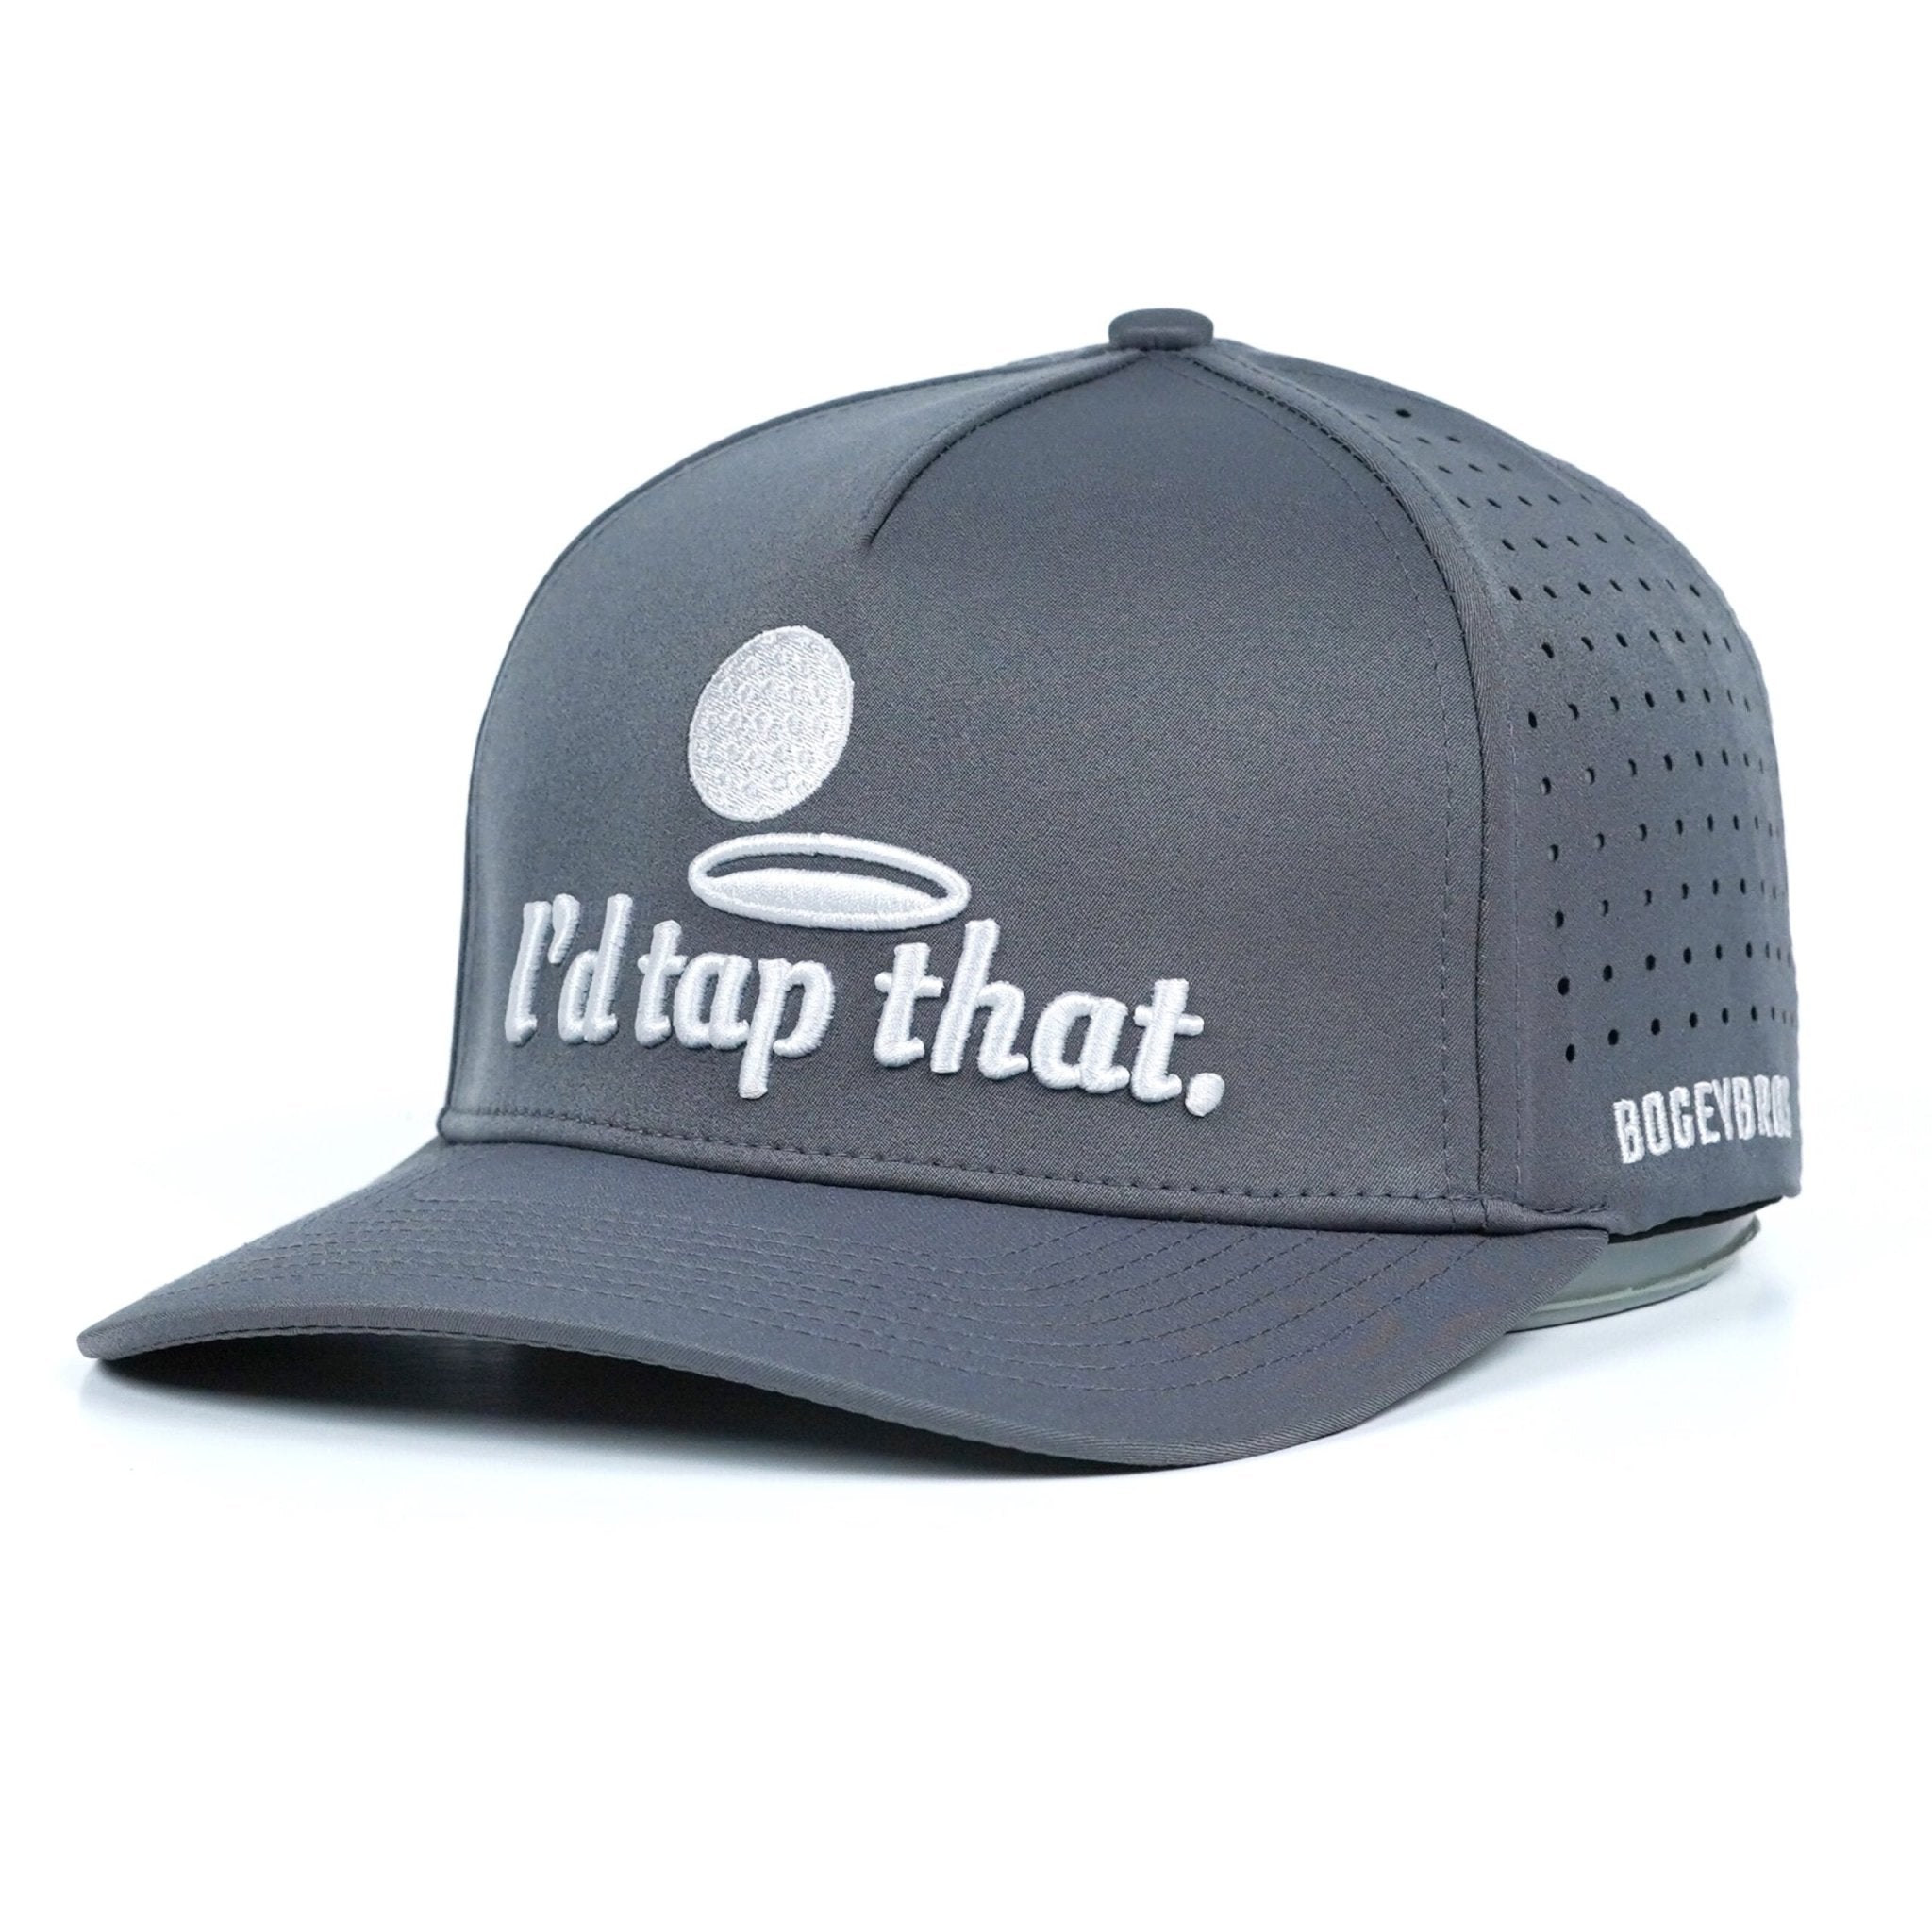 I'd Tap That - Performance Golf Hat - Snapback